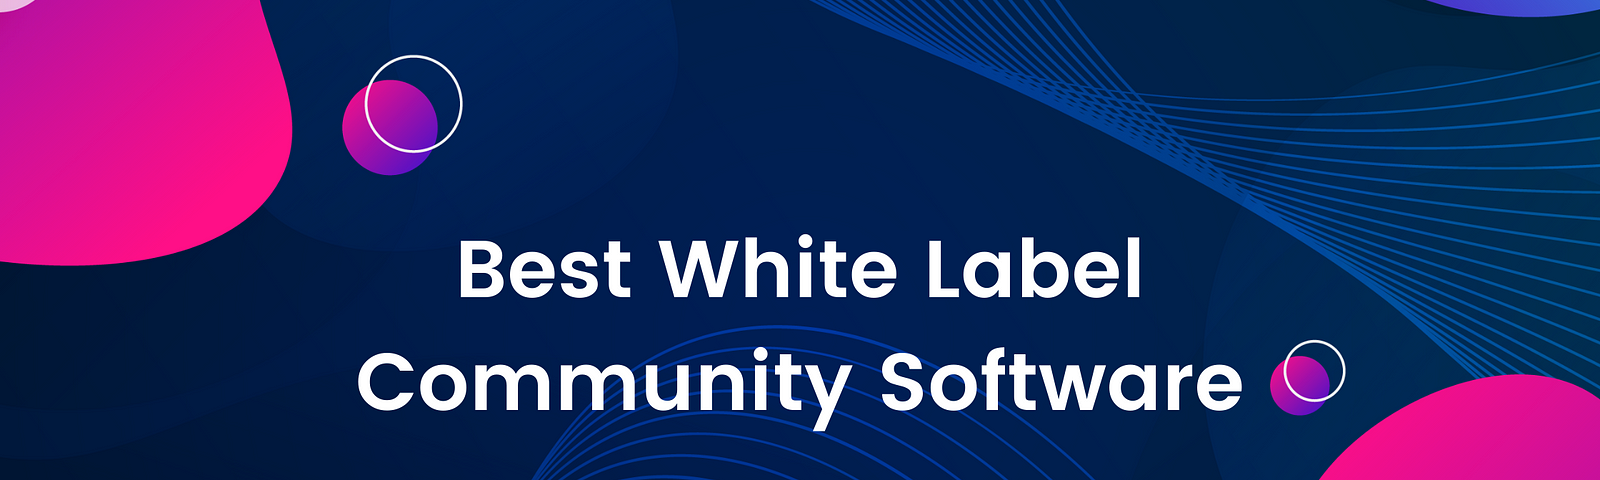 white label community software, Best white label social network platform, White label social networking, White label forum platform, white label community platform